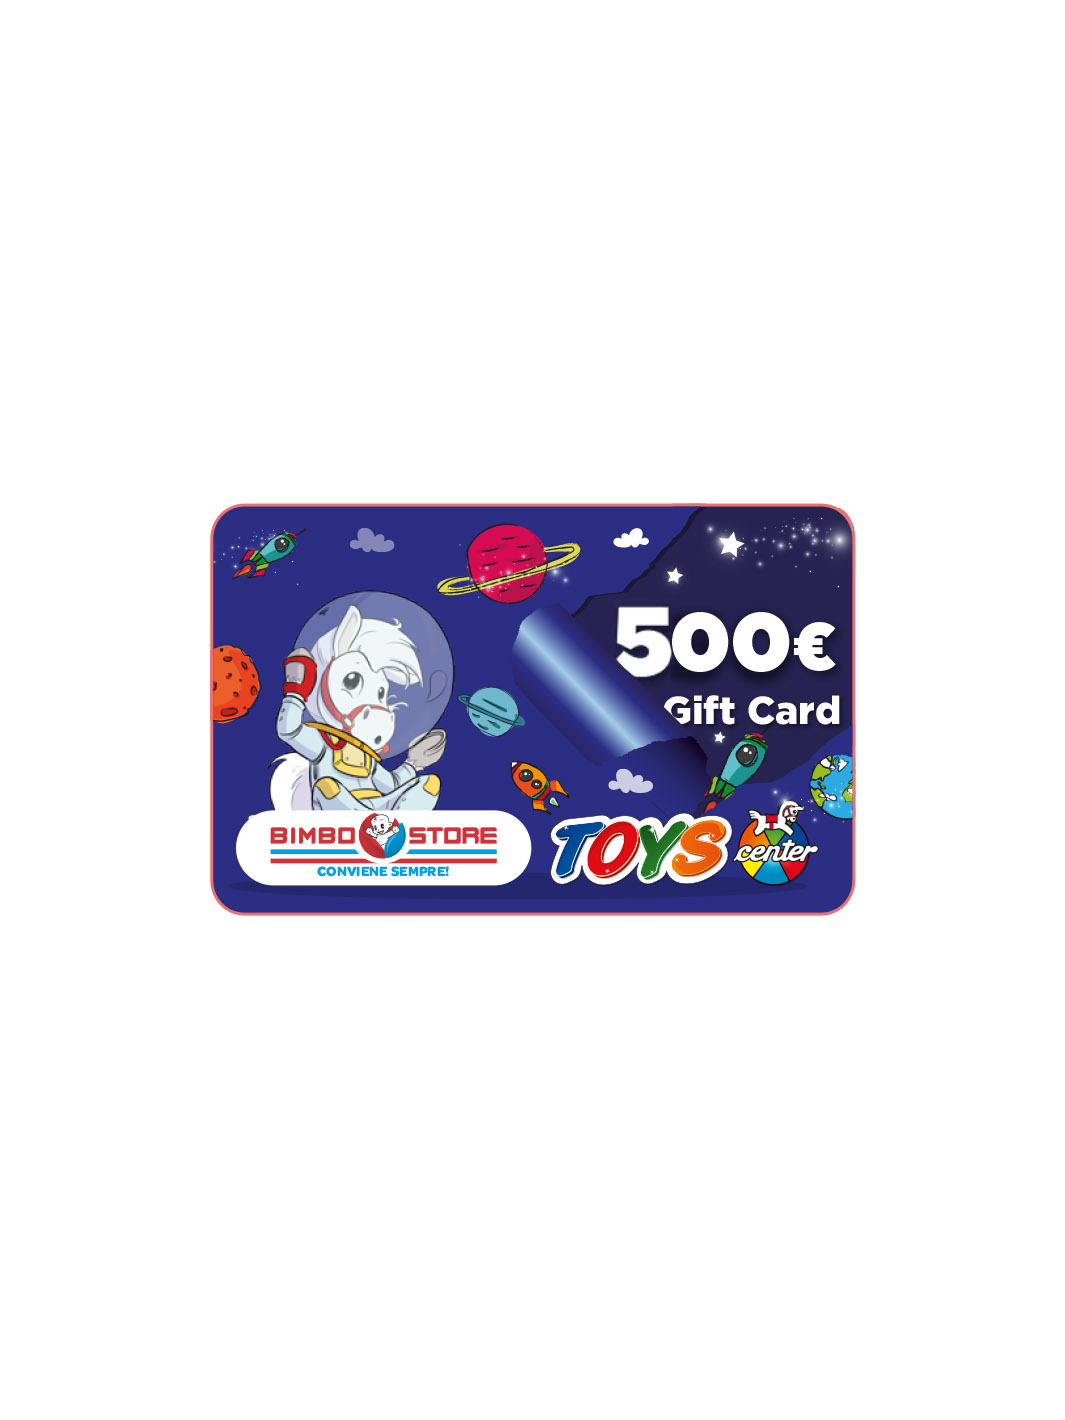 Gift card 500€ - 